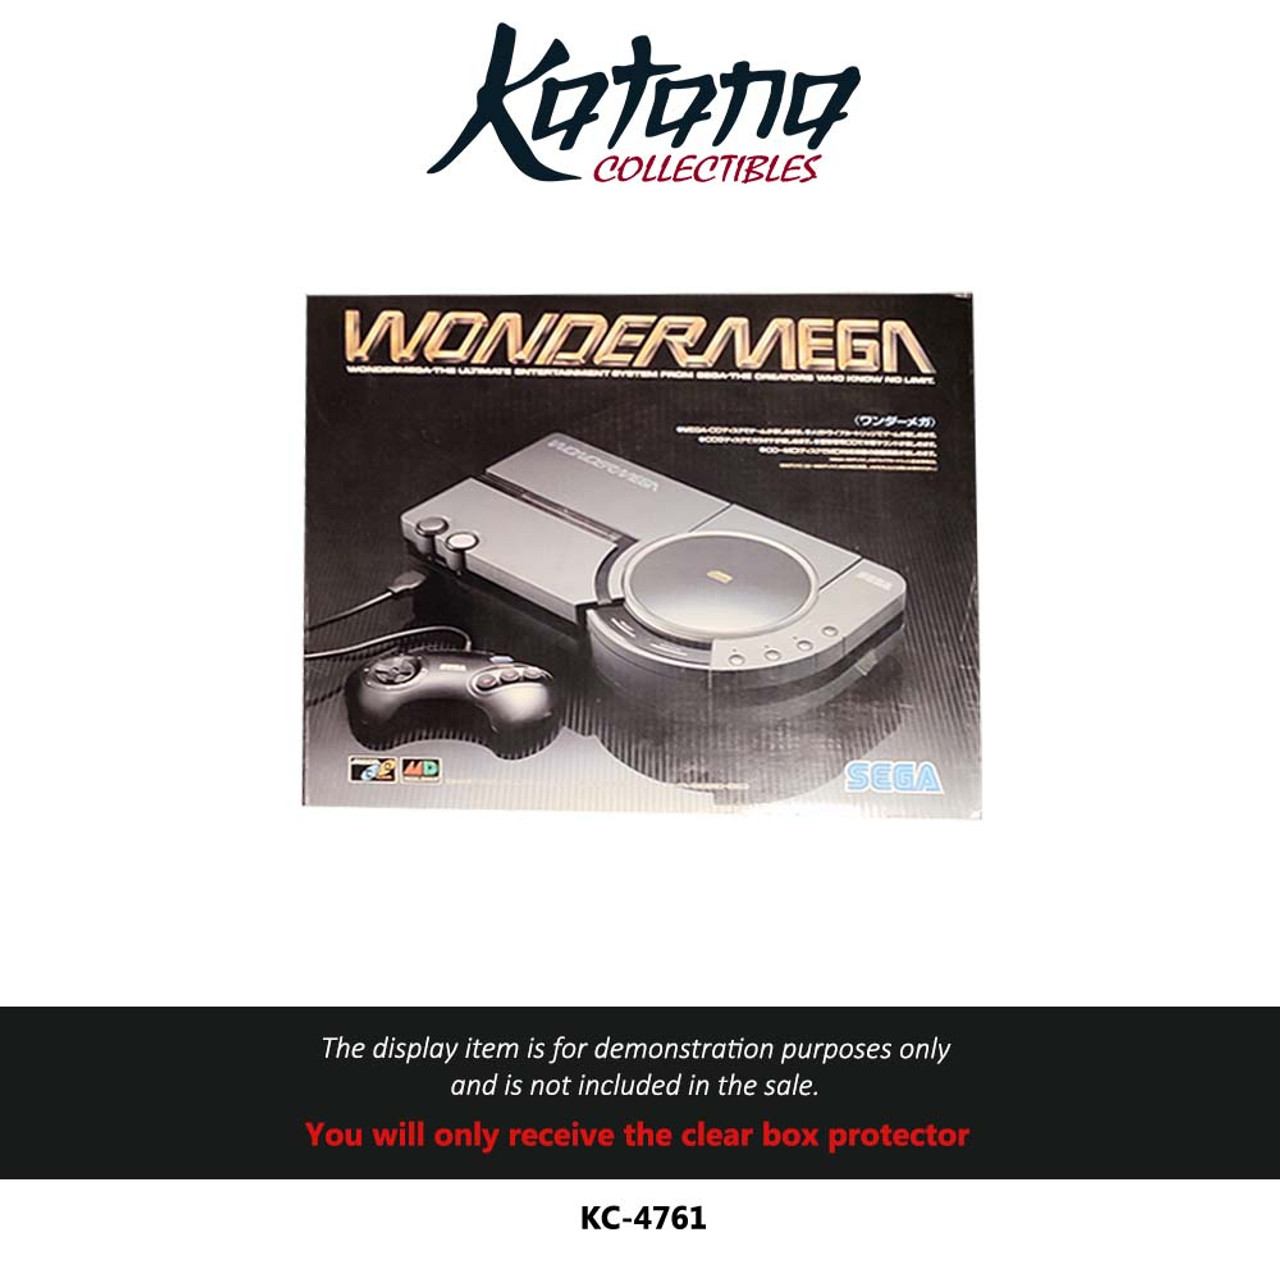 Katana Collectibles Protector For SEGA WONDERMEGA Console